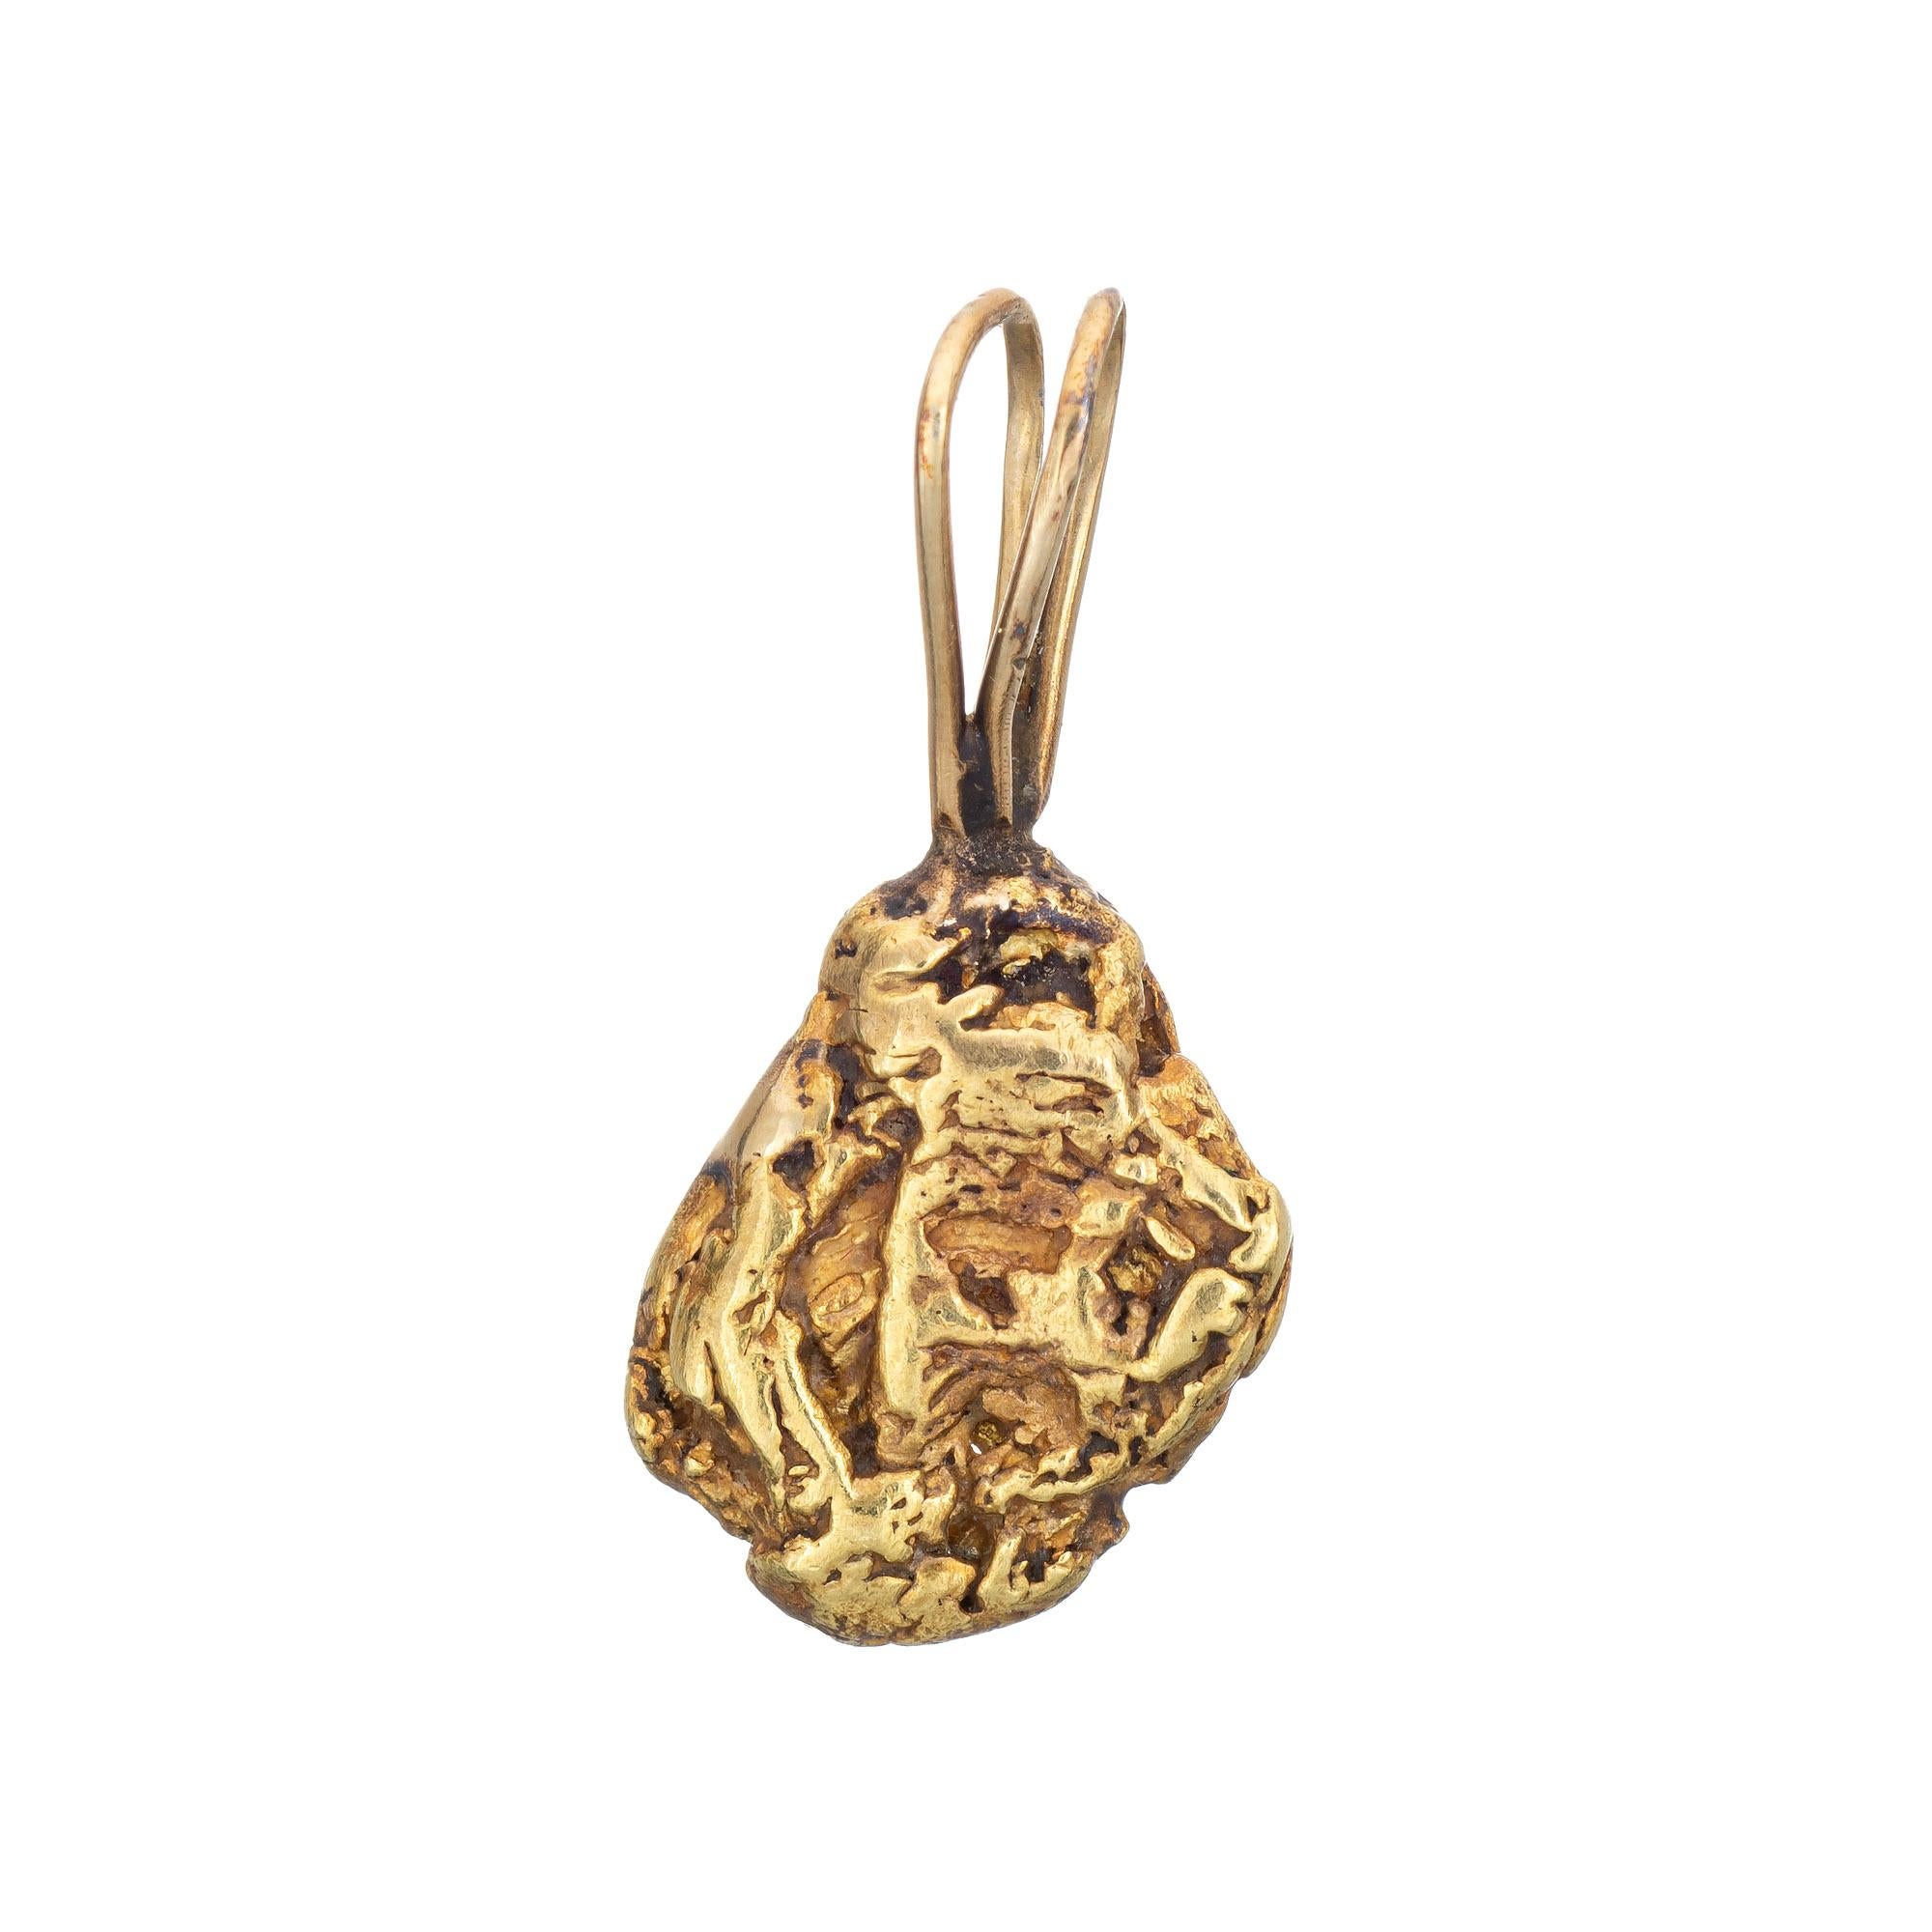 24k gold nugget pendant